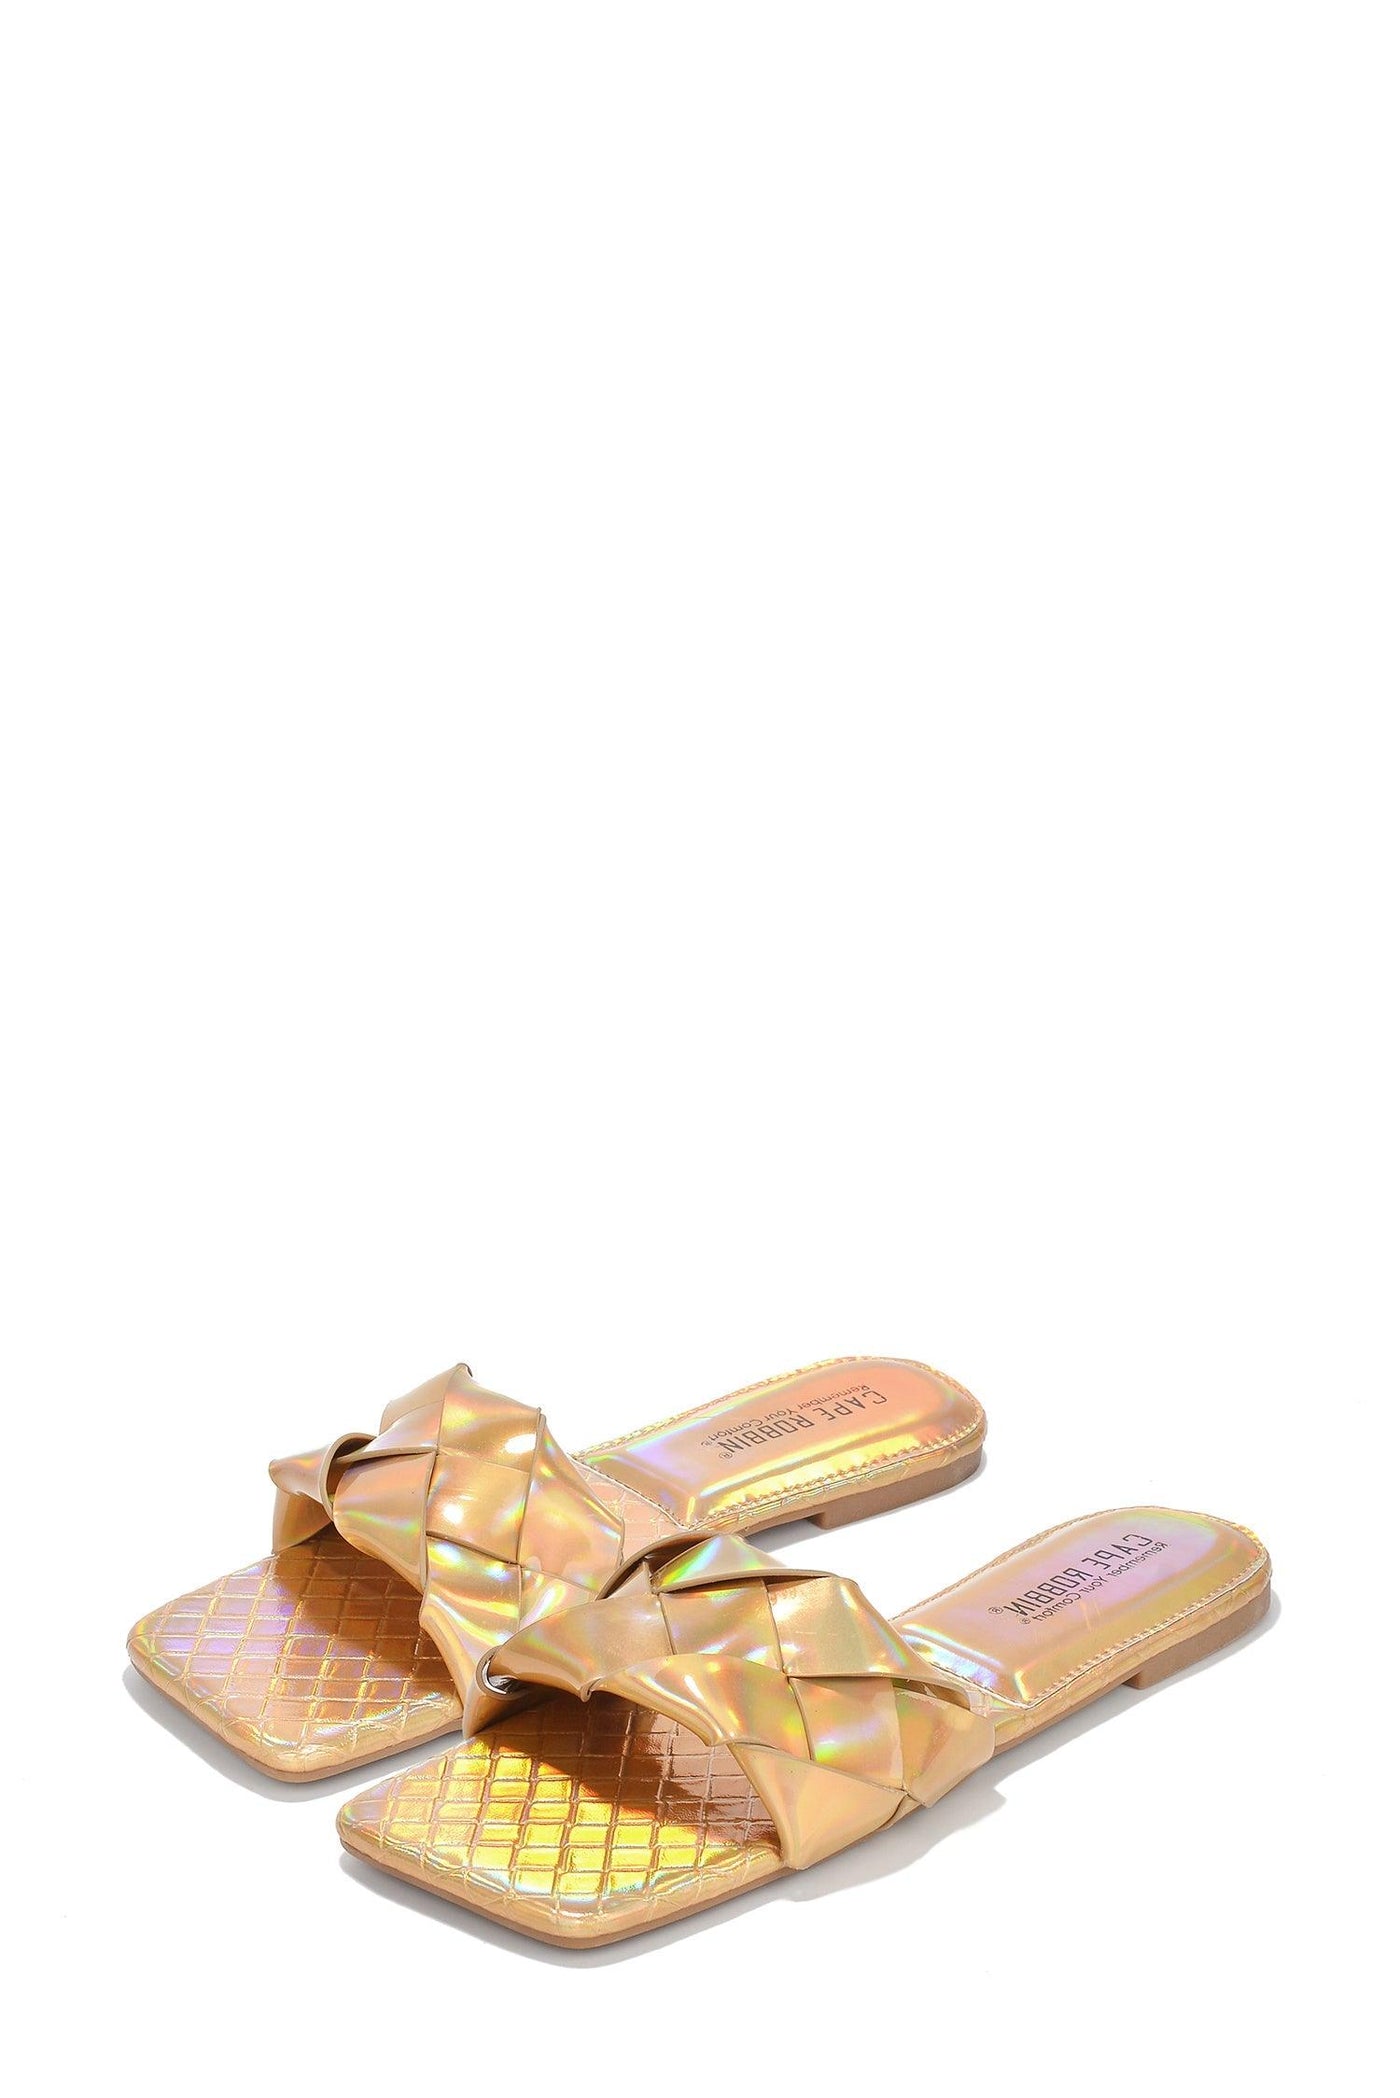 CLARA - GOLD - AMIClubwear